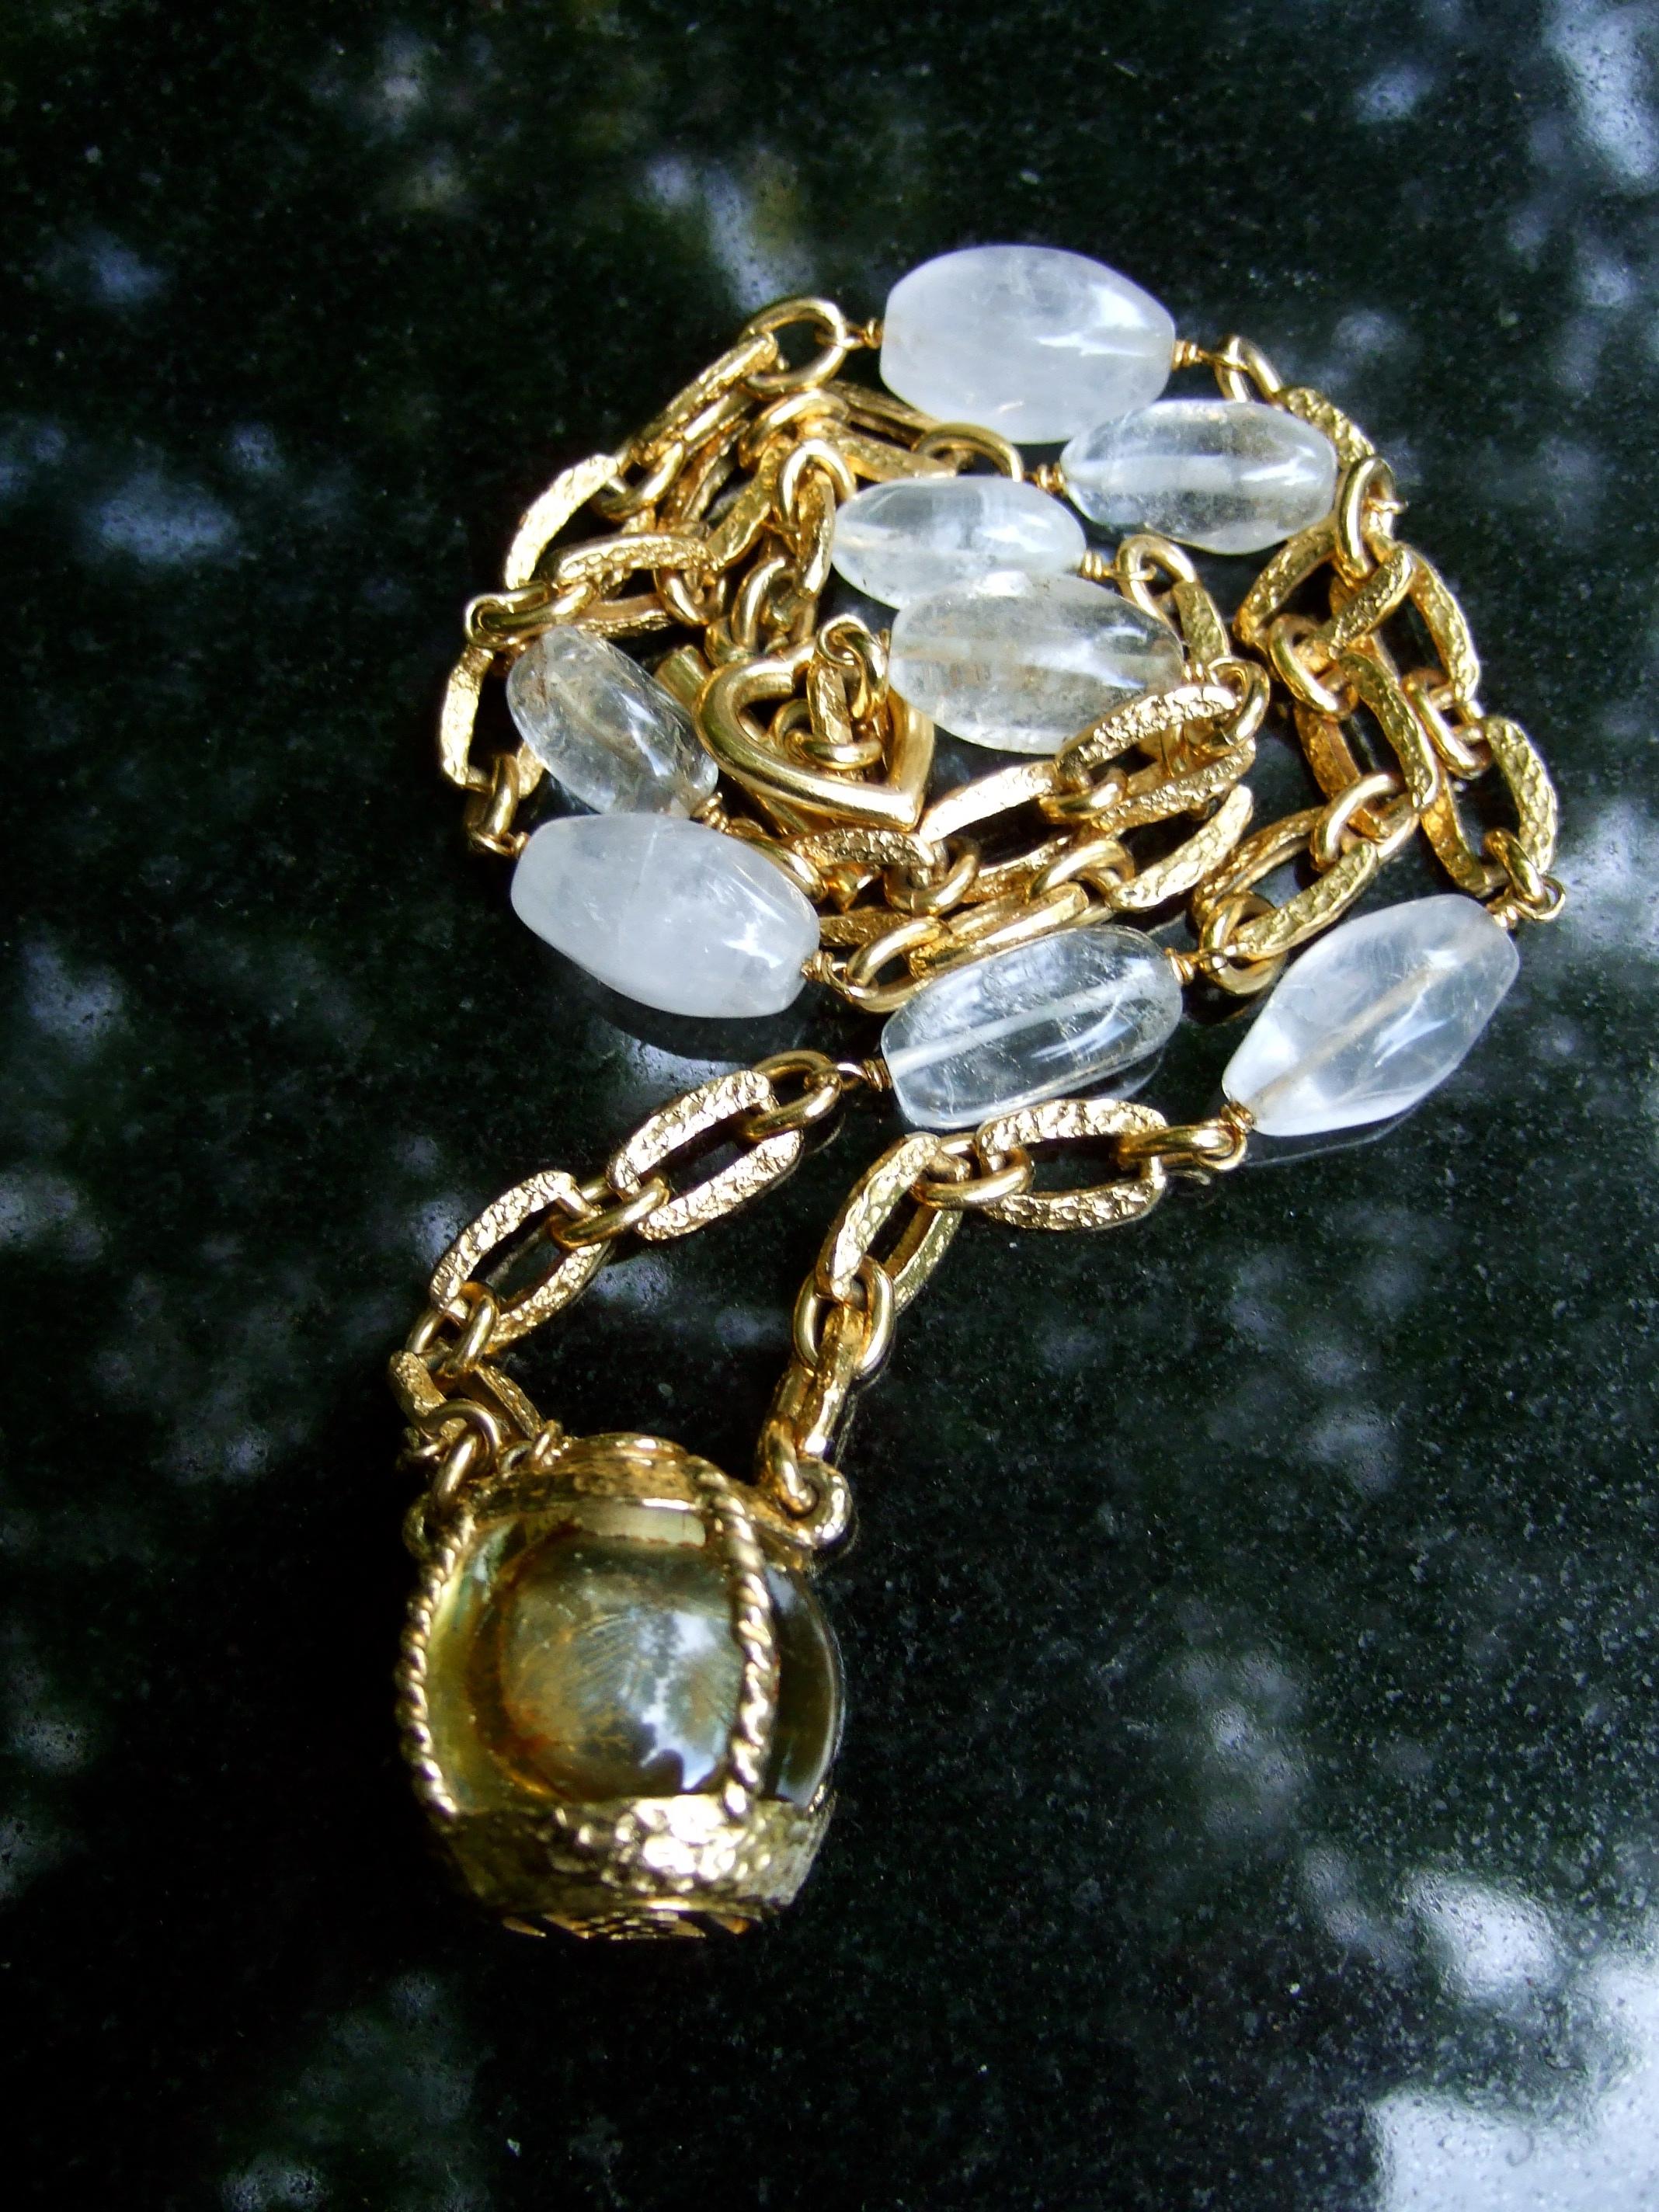 Yves Saint Laurent Rare Crystal Rock Gilt Metal Necklace by Goossens c 1983  For Sale 6